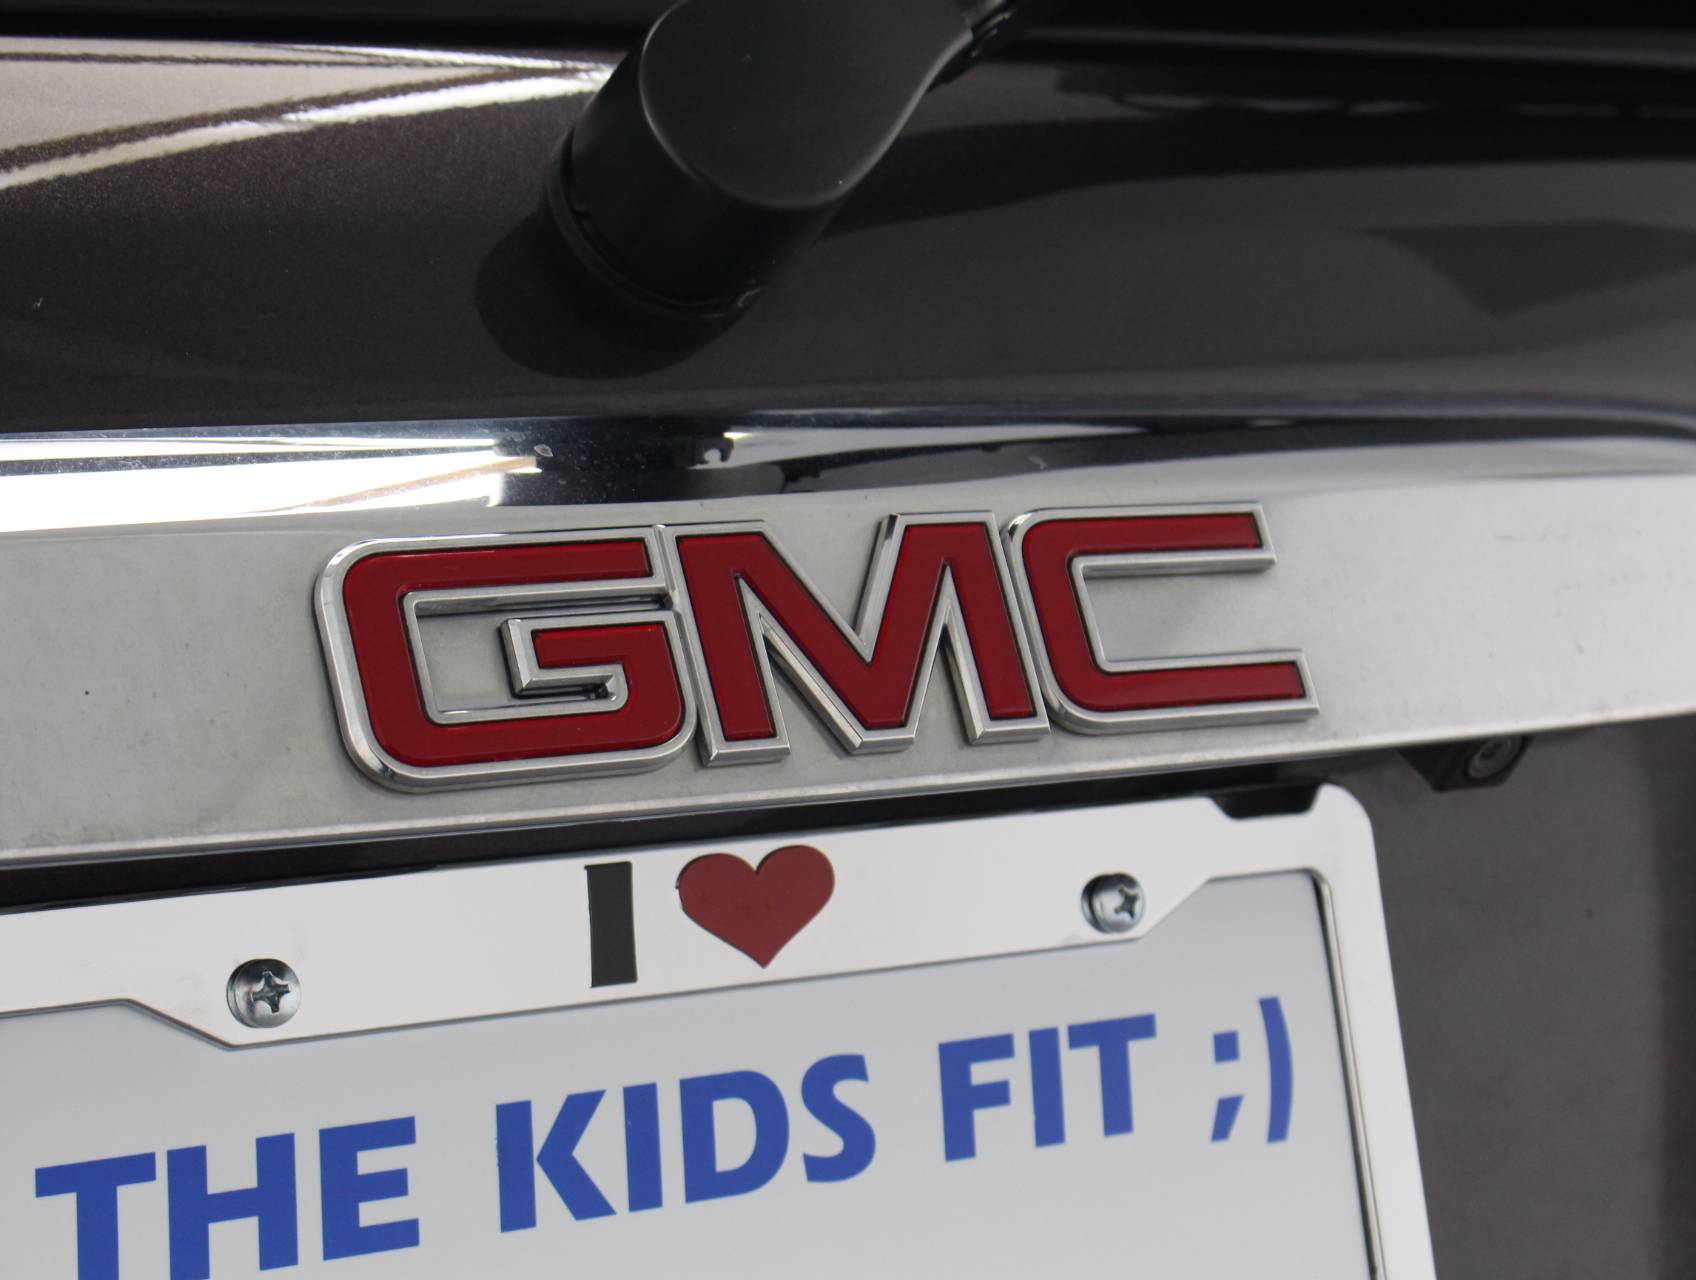 Florida Fine Cars - Used GMC ACADIA 2015 WEST PALM SLT1